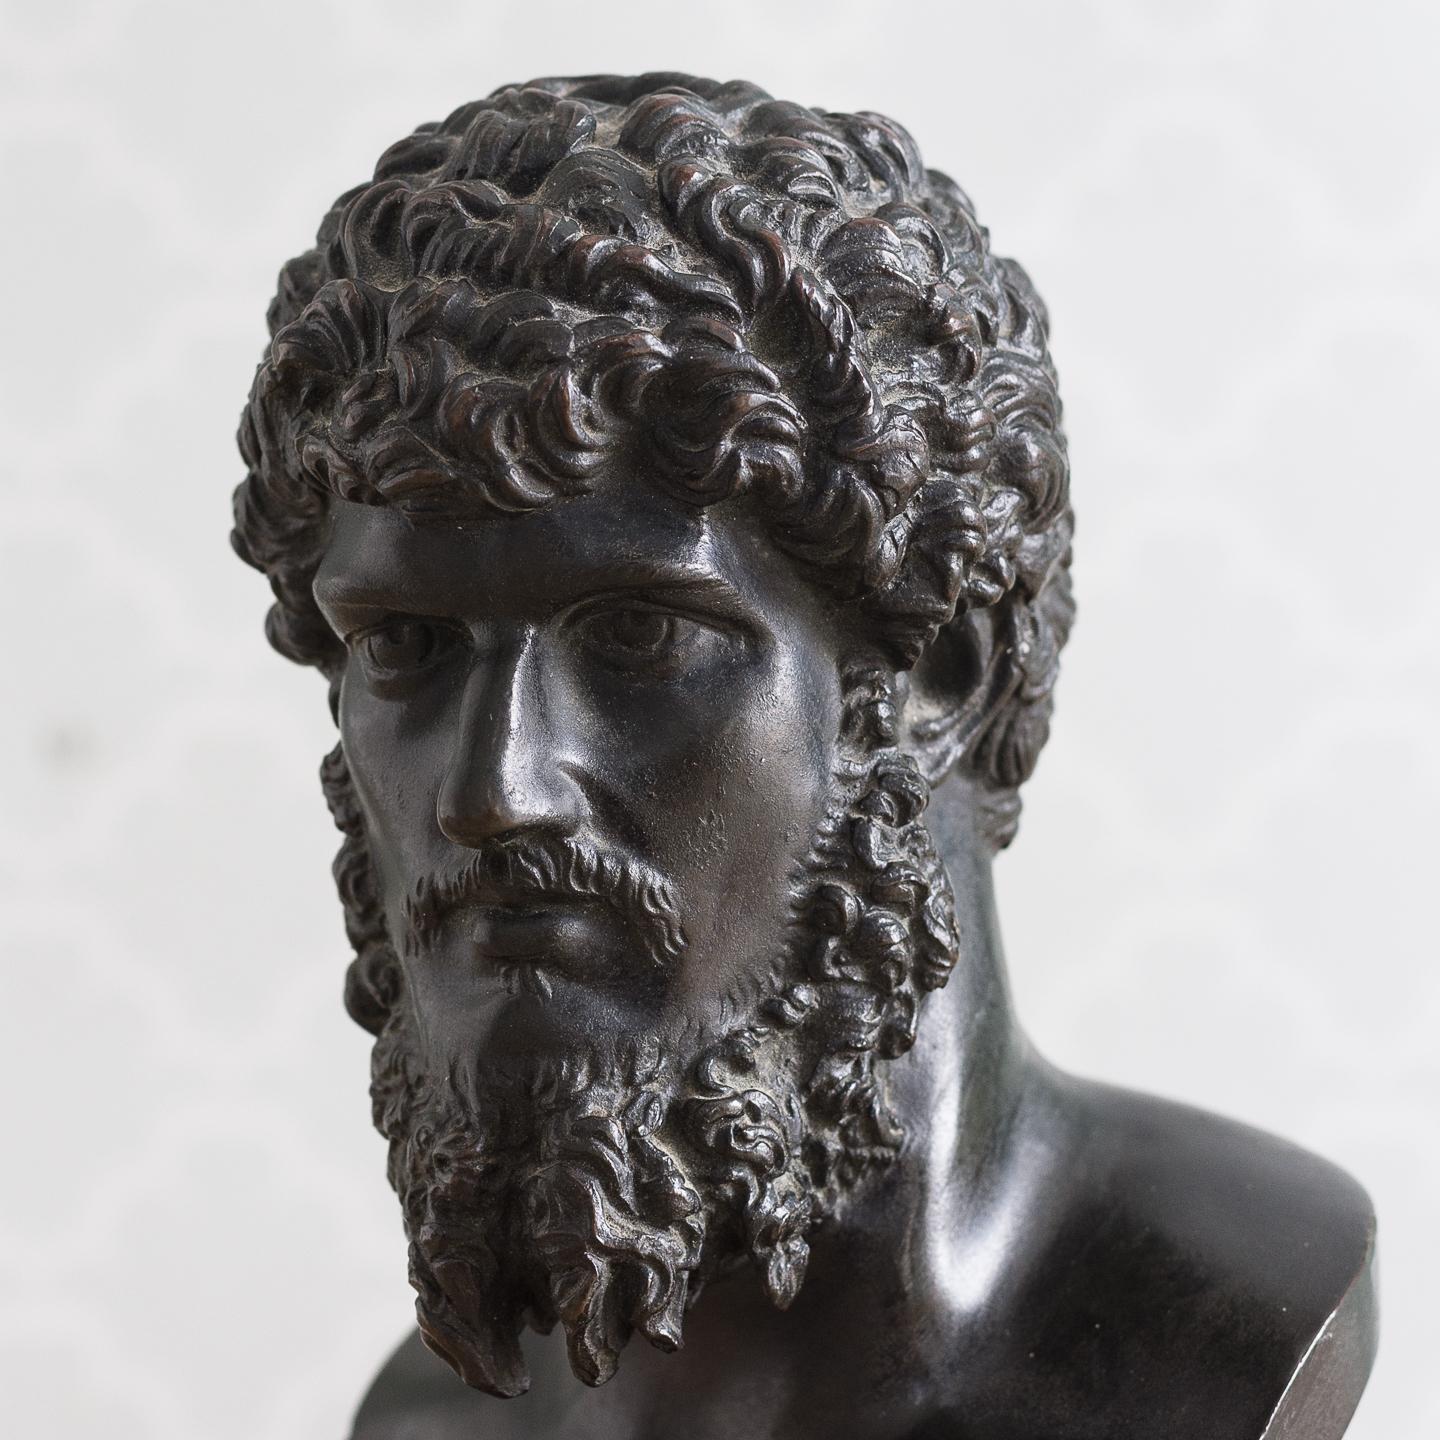 Italian mid-nineteenth century bronze bust of Lucius Verus, circa 1860-1870, on circular waisted socle.

Lucius Verus ruled Rome alongside Marcus Aurelius from 161 - 169AD.